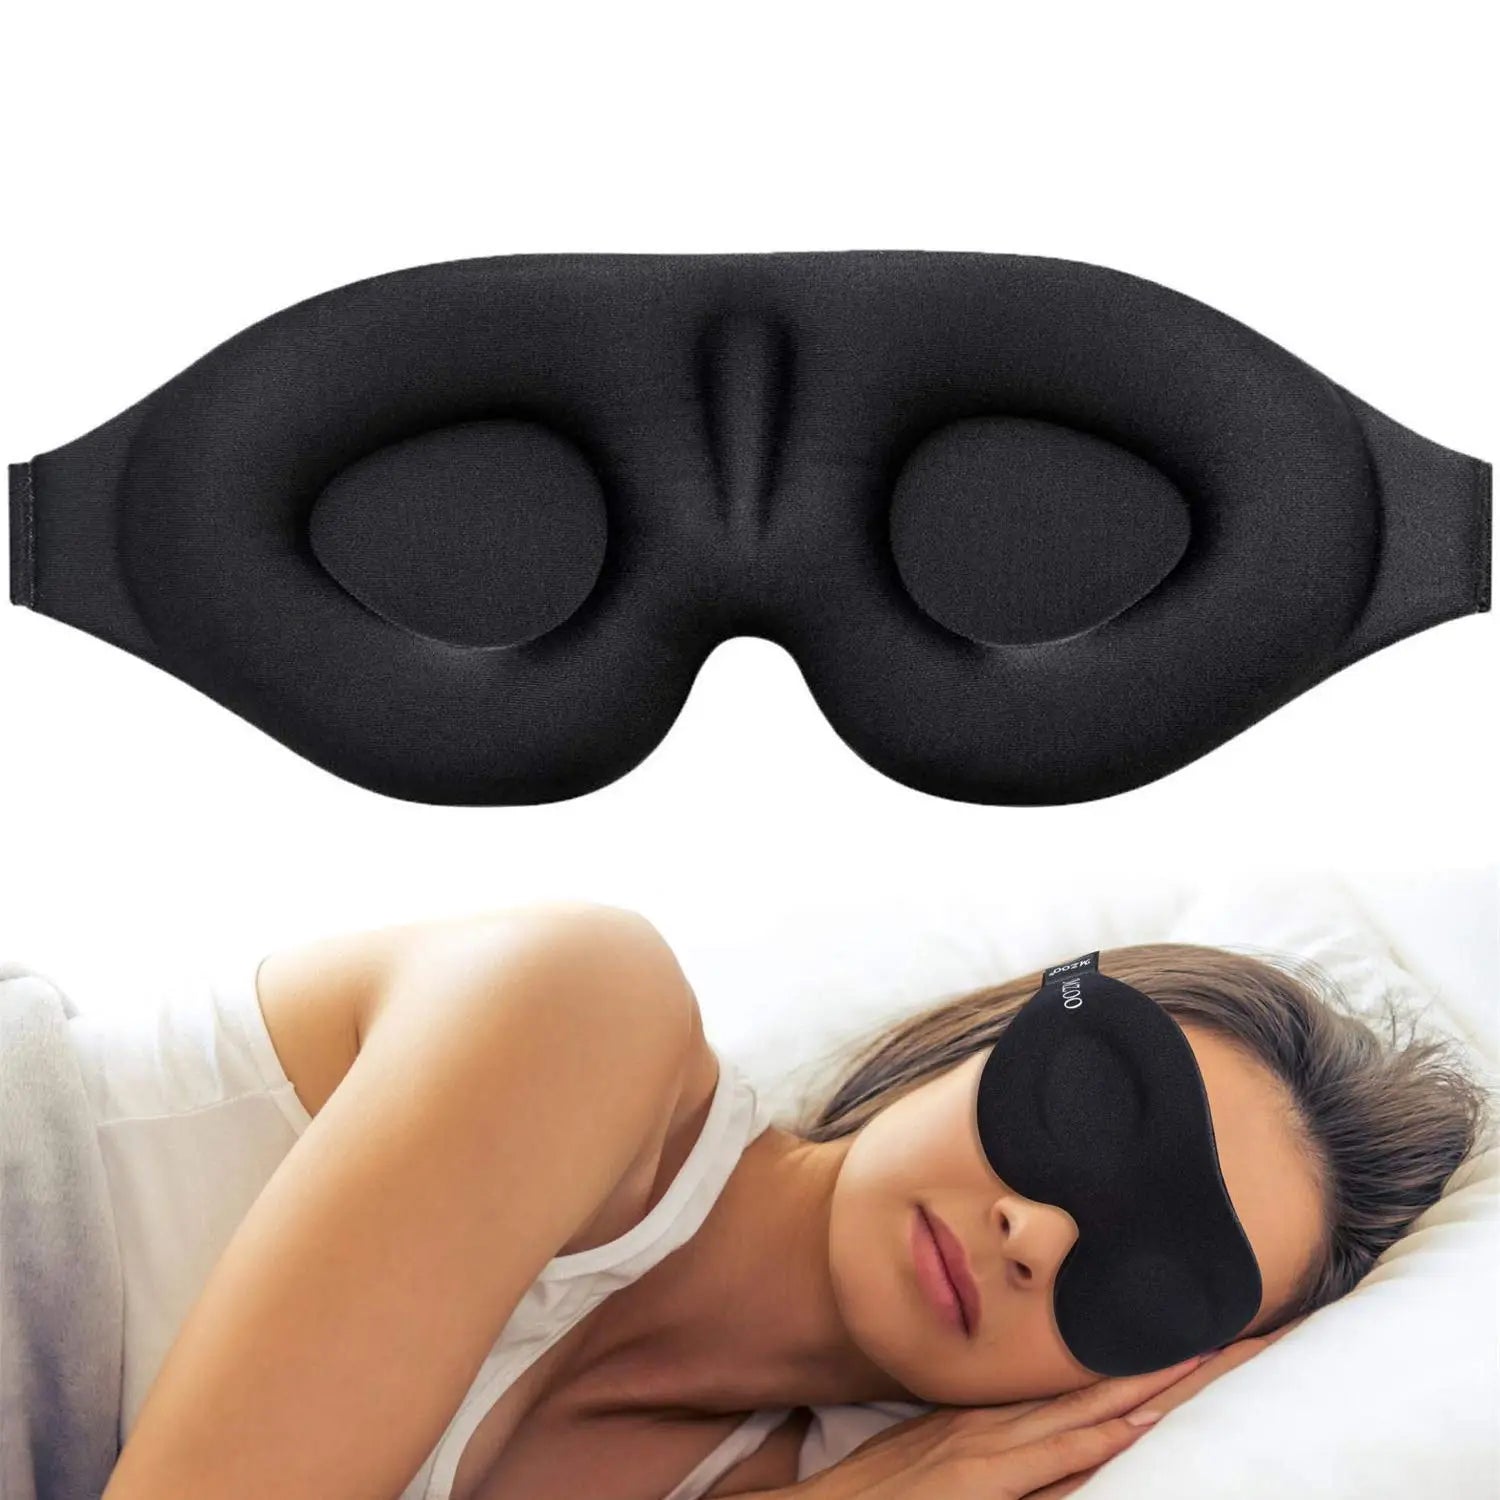 Memory Foam 3D Contoured Sleep Mask: Ultimate Comfort and Light Blocking